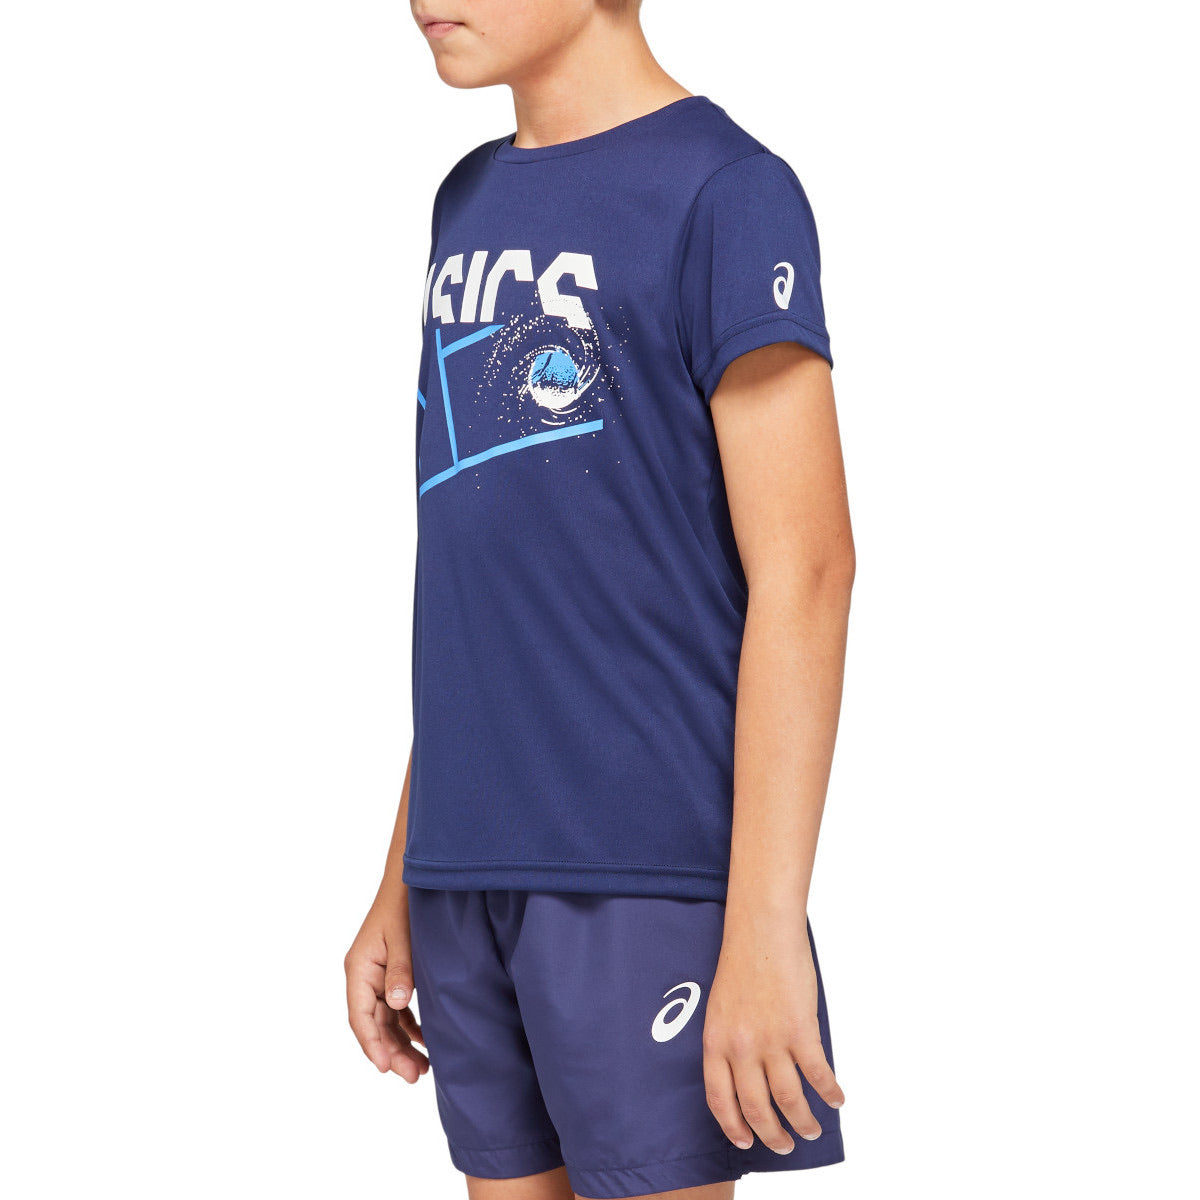 Asics Tennis B Gpx T for Kids - Sporty Pro